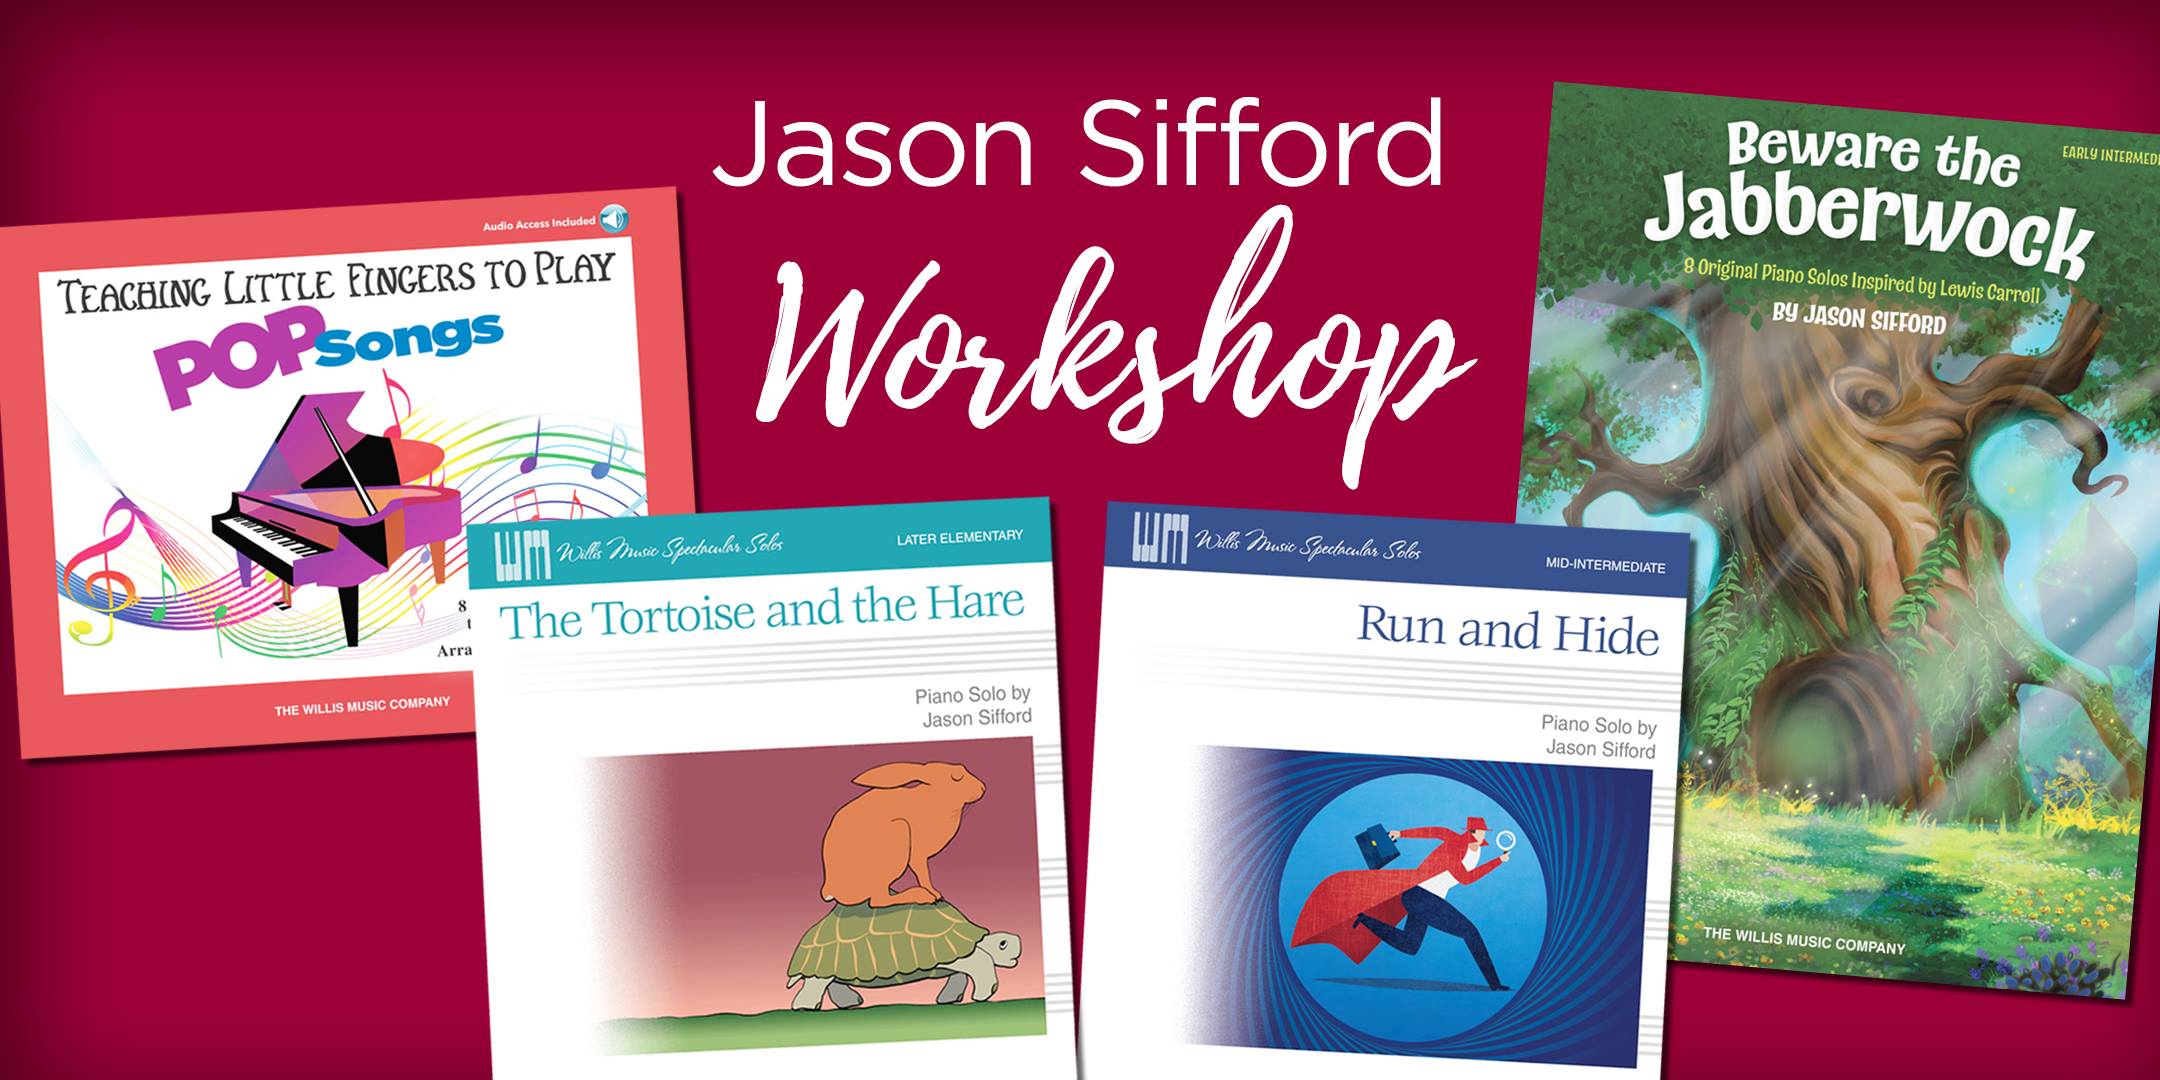 Piano Teacher Workshop Featuring Jason Sifford-Kenwood